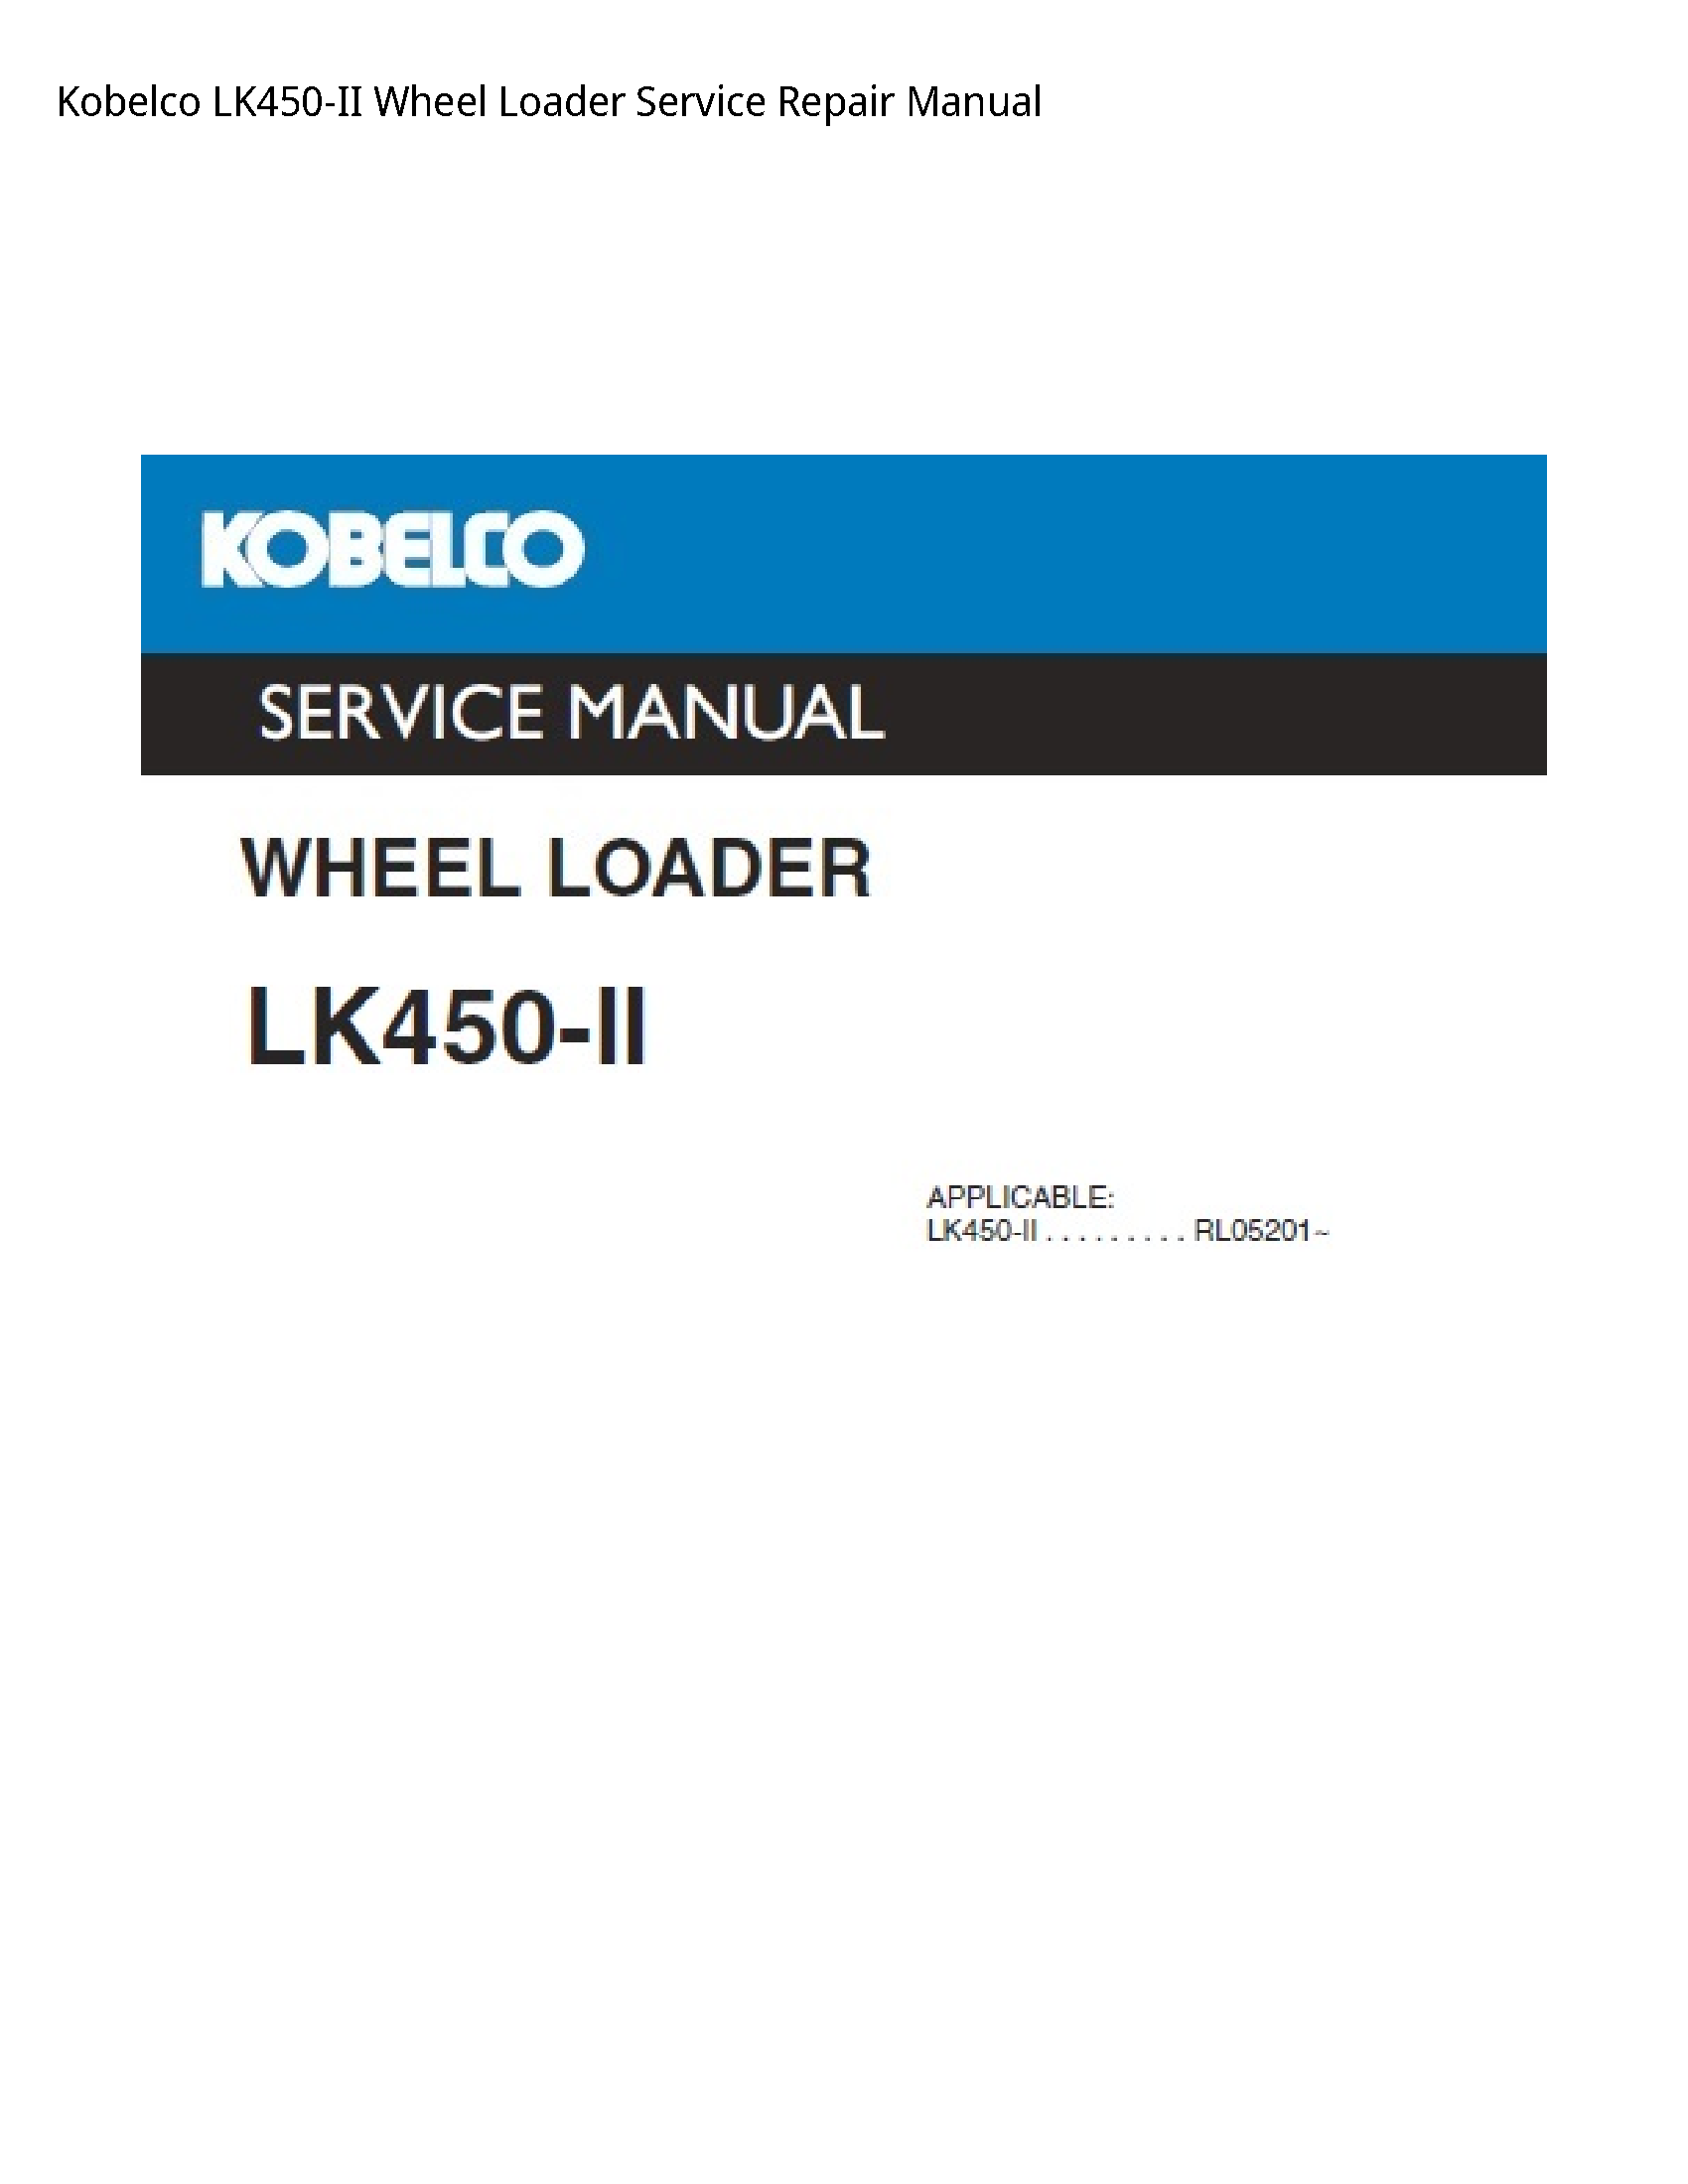 Kobelco LK450-II Wheel Loader manual